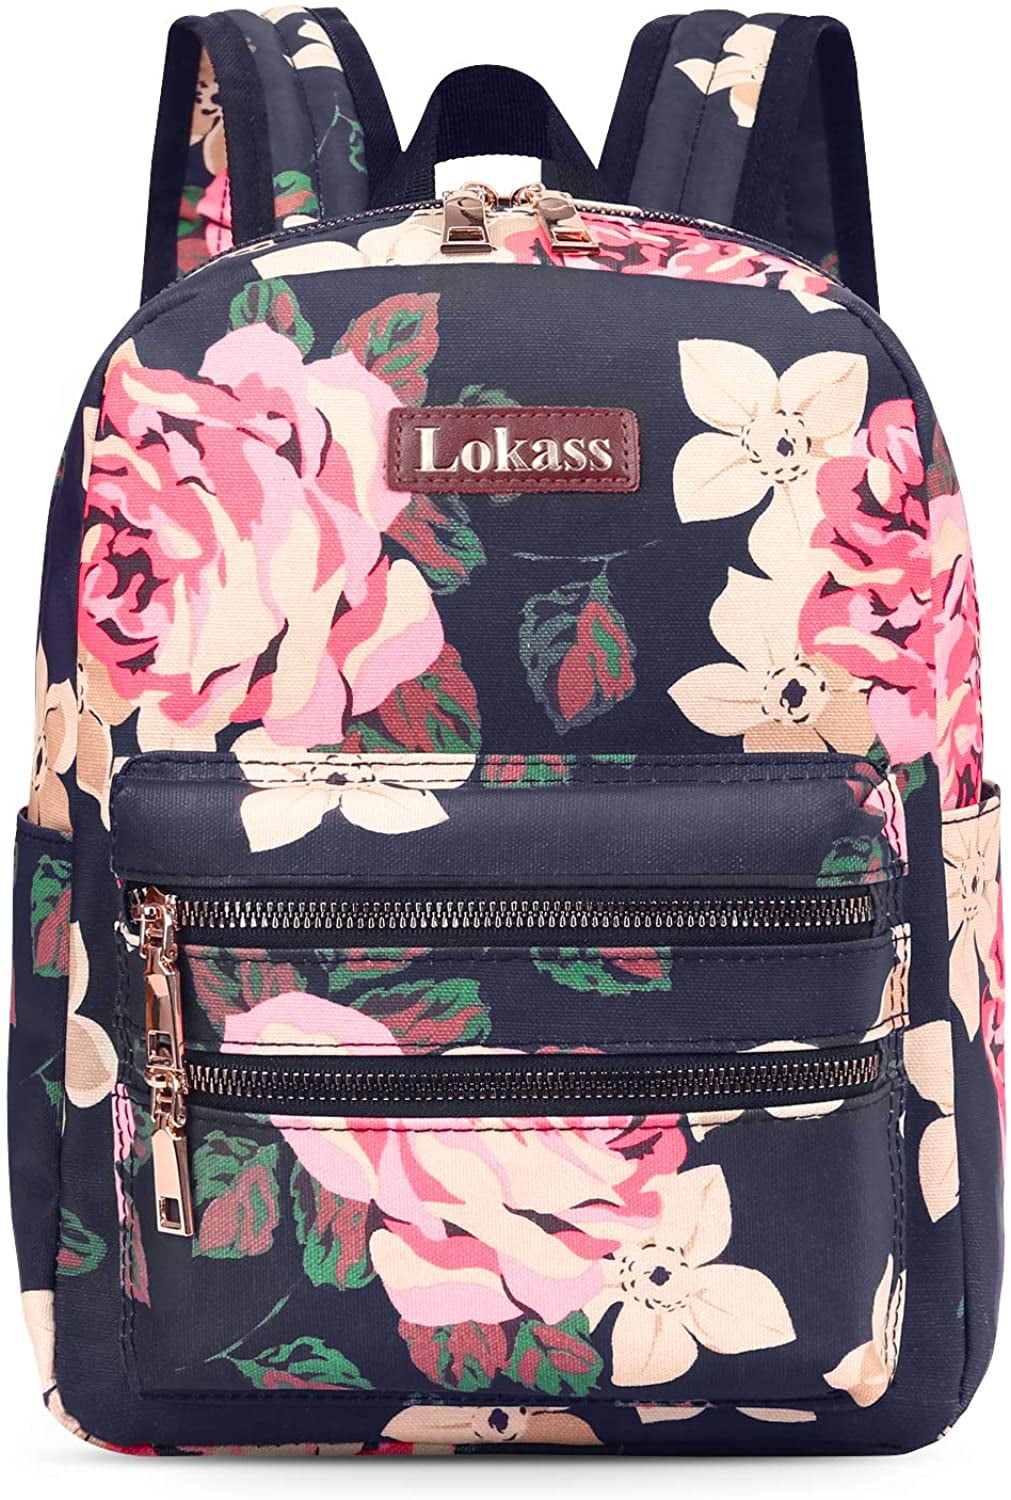 Travel Daypack Laptop Backpack College School Package Bookbag for Women Men Blue Flowers 